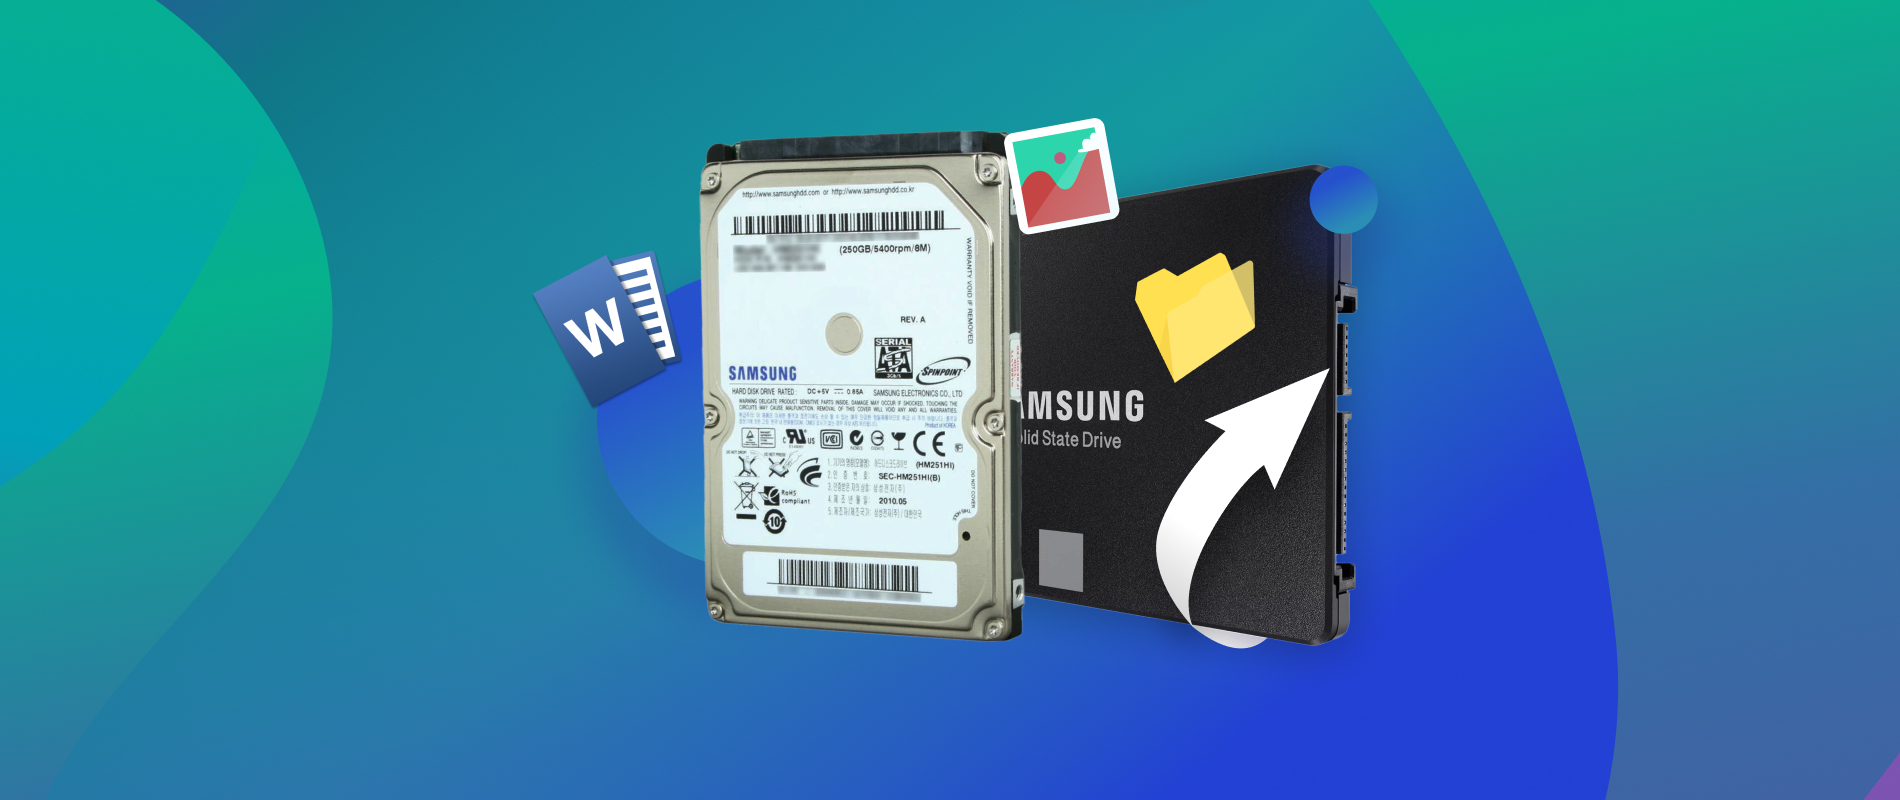 Håndfuld stadig mikrocomputer Samsung Hard Drive Recovery: Recover Data From a Samsung Hard Drive